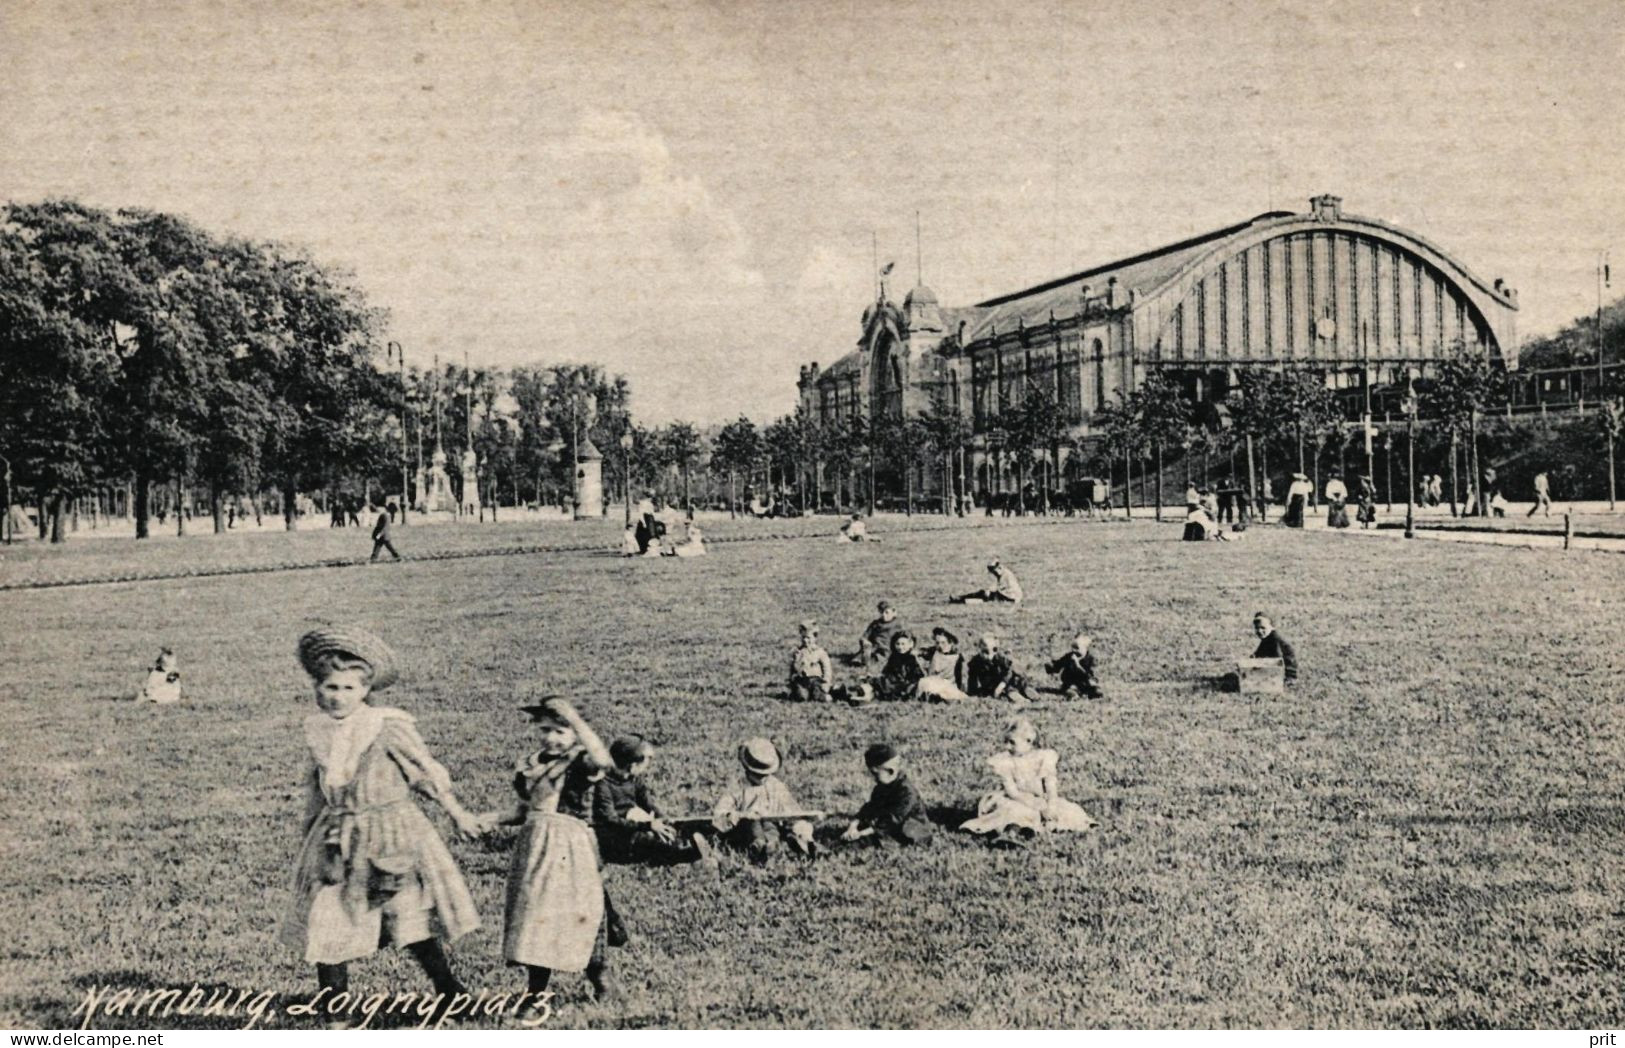 Loignyplatz Hamburg Children On The Grass 1906 Unused Real Photo Postcard. Publisher Dr Trnkler Co Hamburg - Eimsbüttel